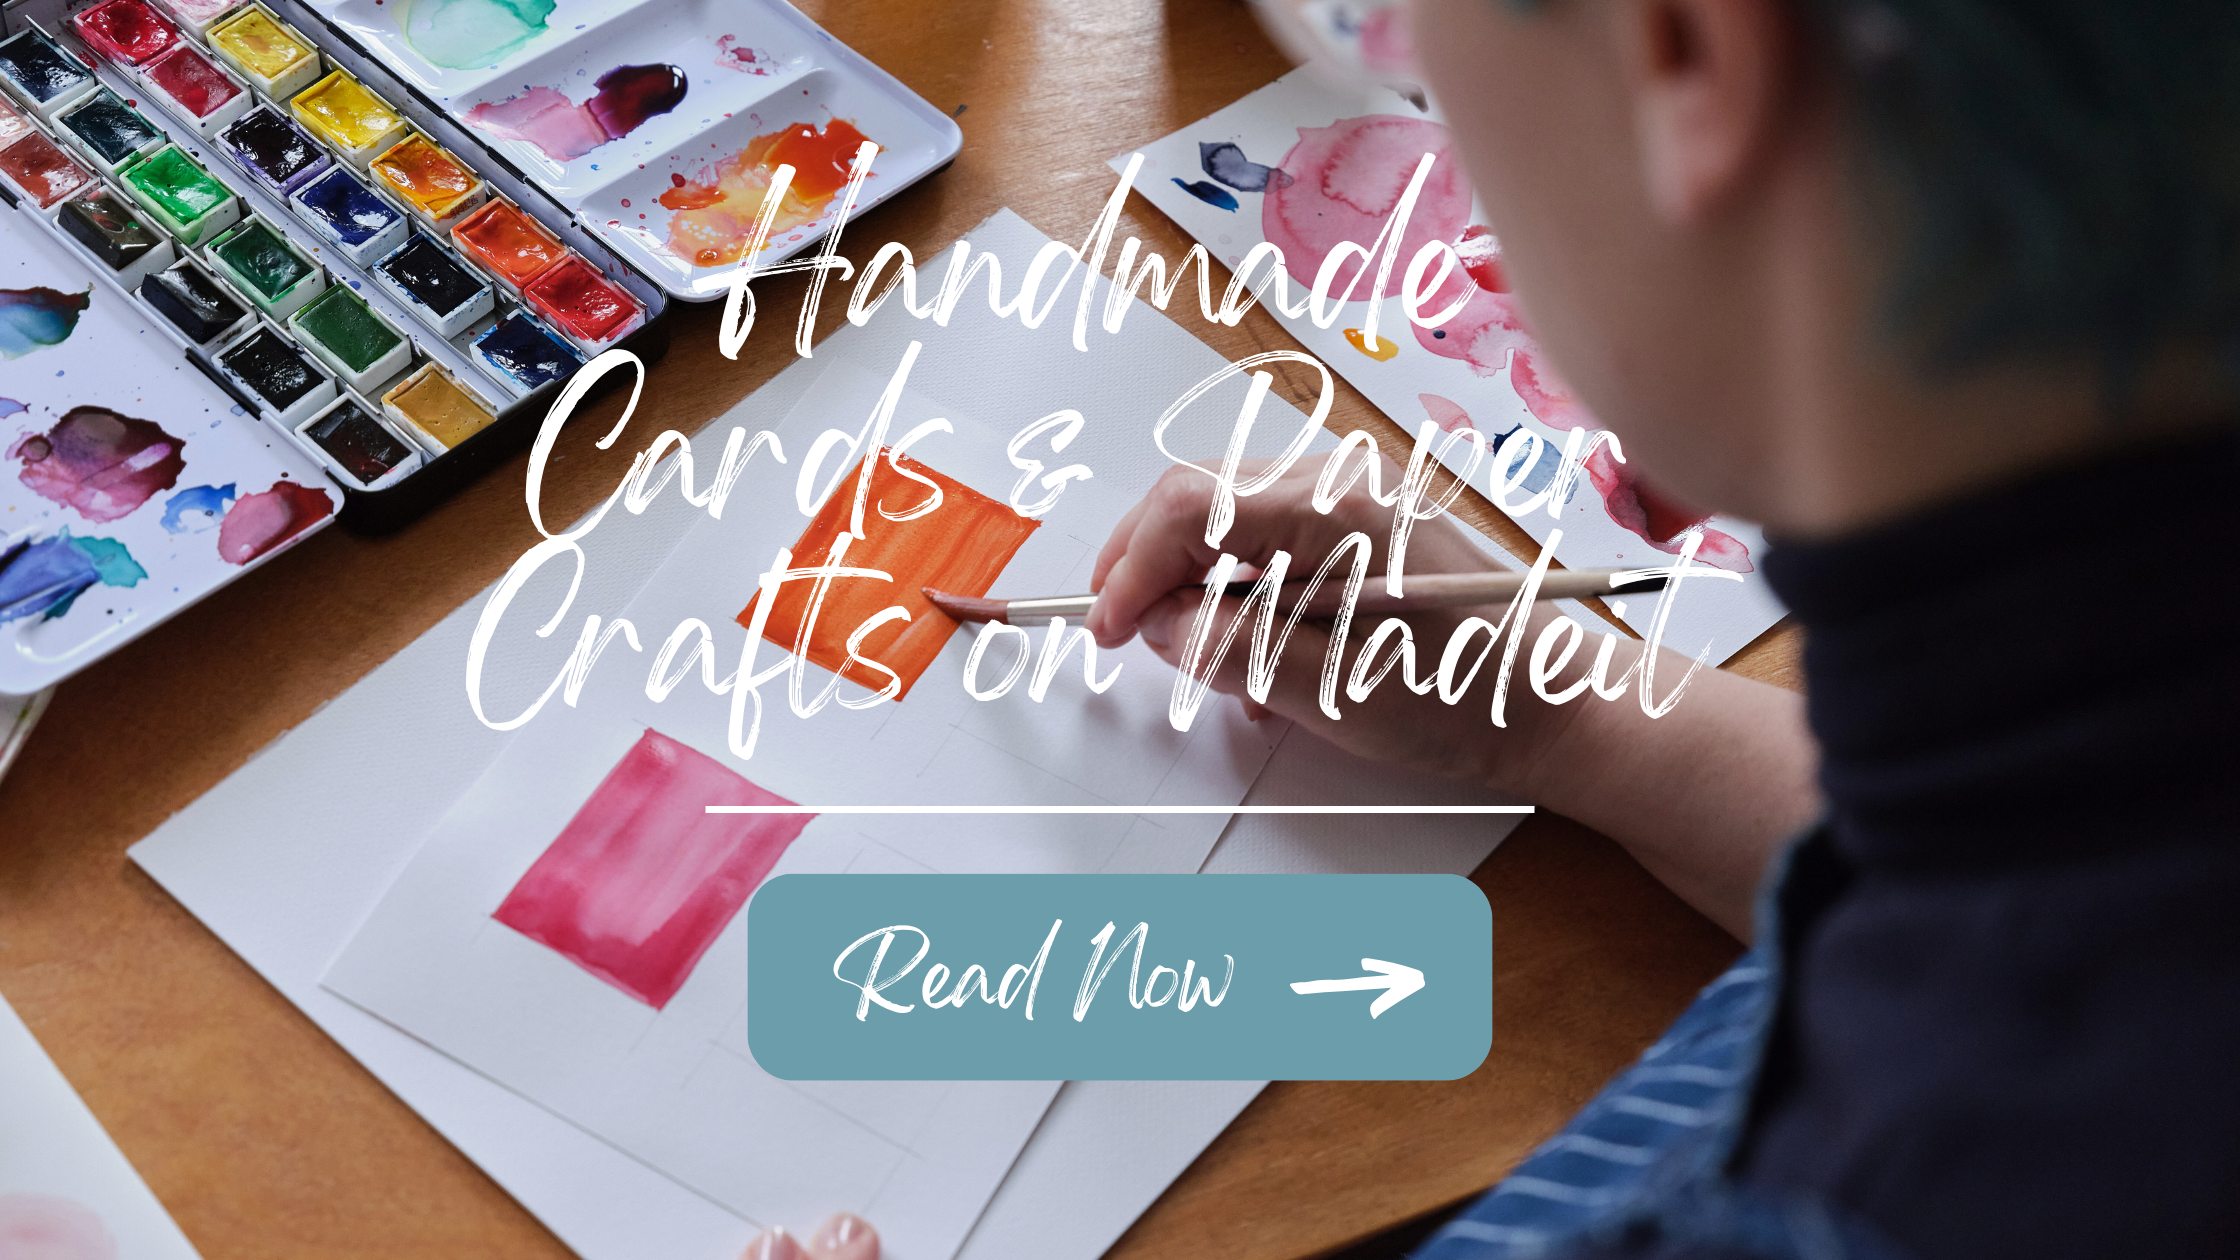 Defining Handmade Cards & Paper Crafts at Madeit